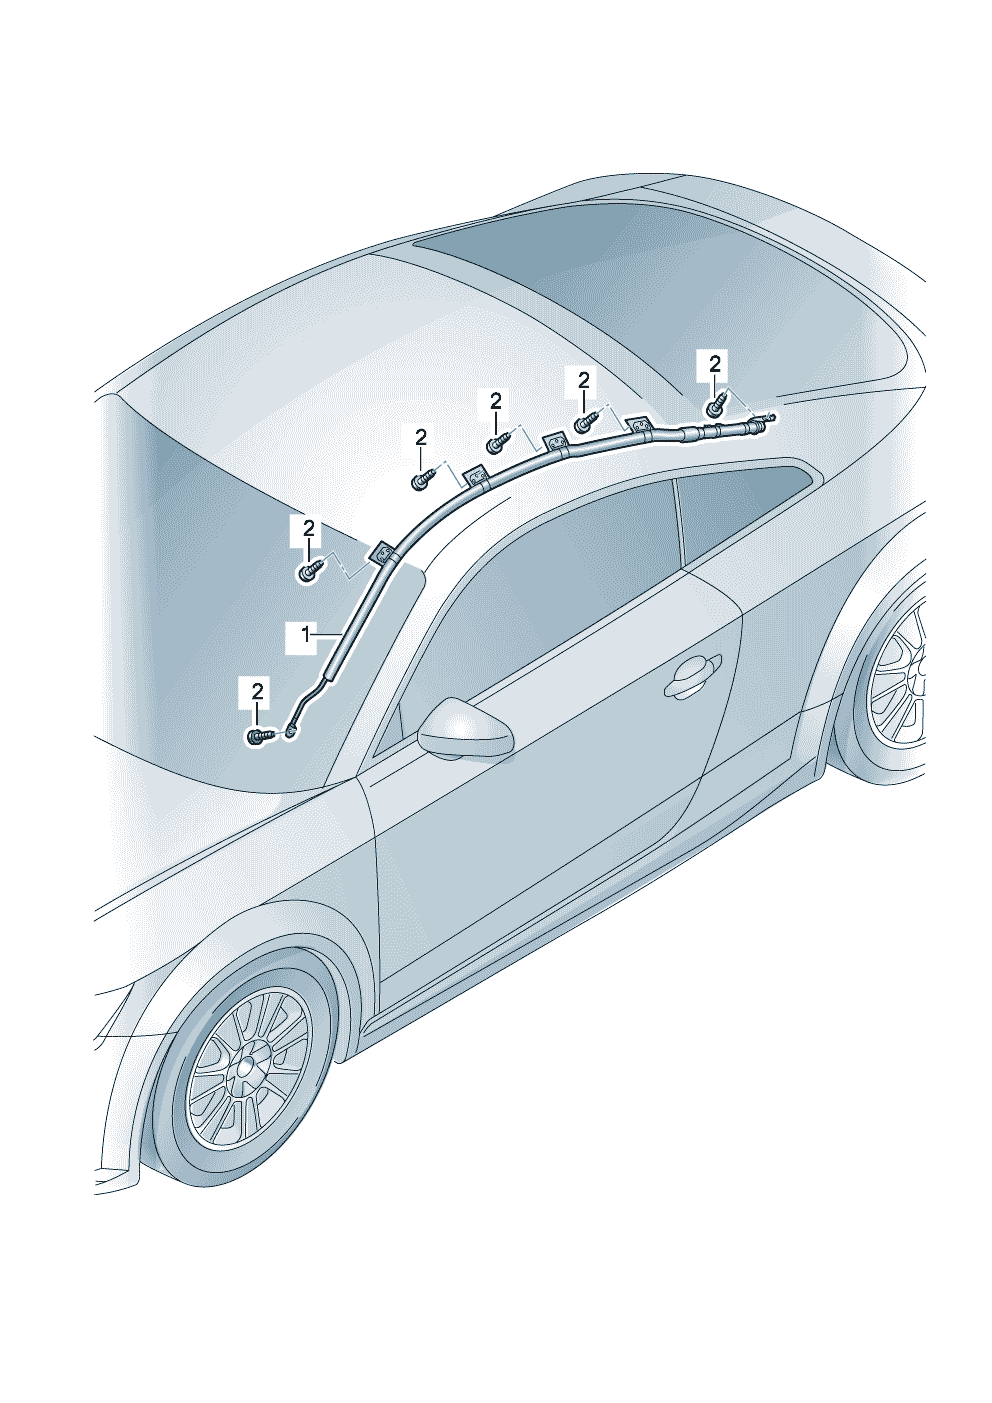 airbag (poduszka powietrzna) <br/><br/><br/><br/>Towar niebezpieczny<br/><br/><br/><br/>patrz reparaturleitfaden  - Audi TT/TTS Coupe/Roadster - att